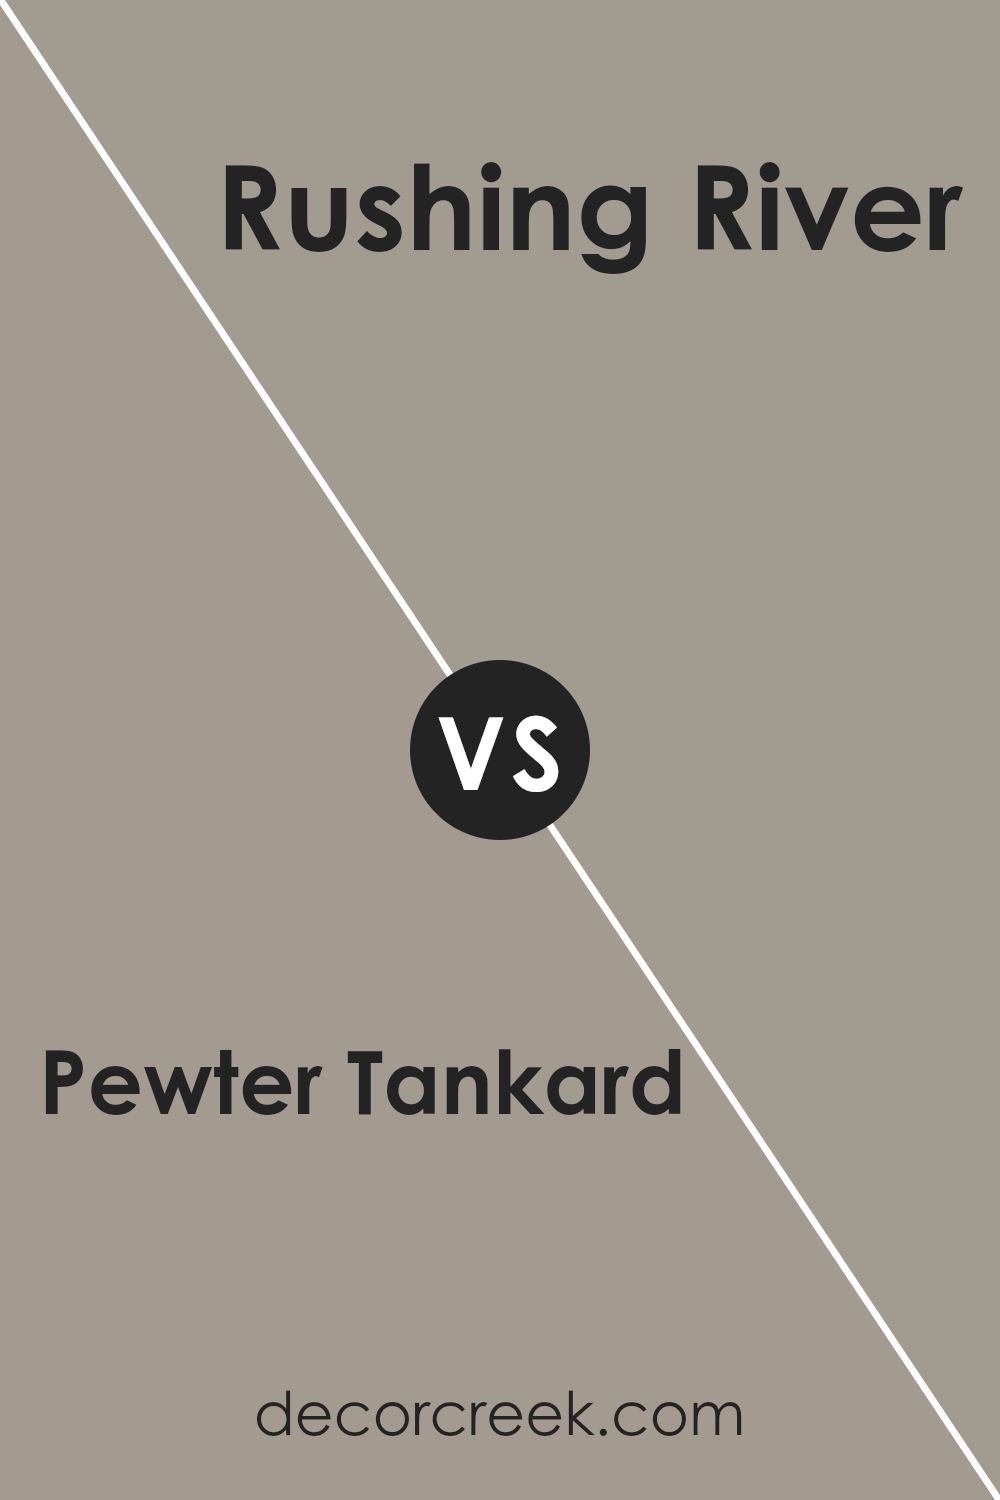 pewter_tankard_sw_0023_vs_rushing_river_sw_7746